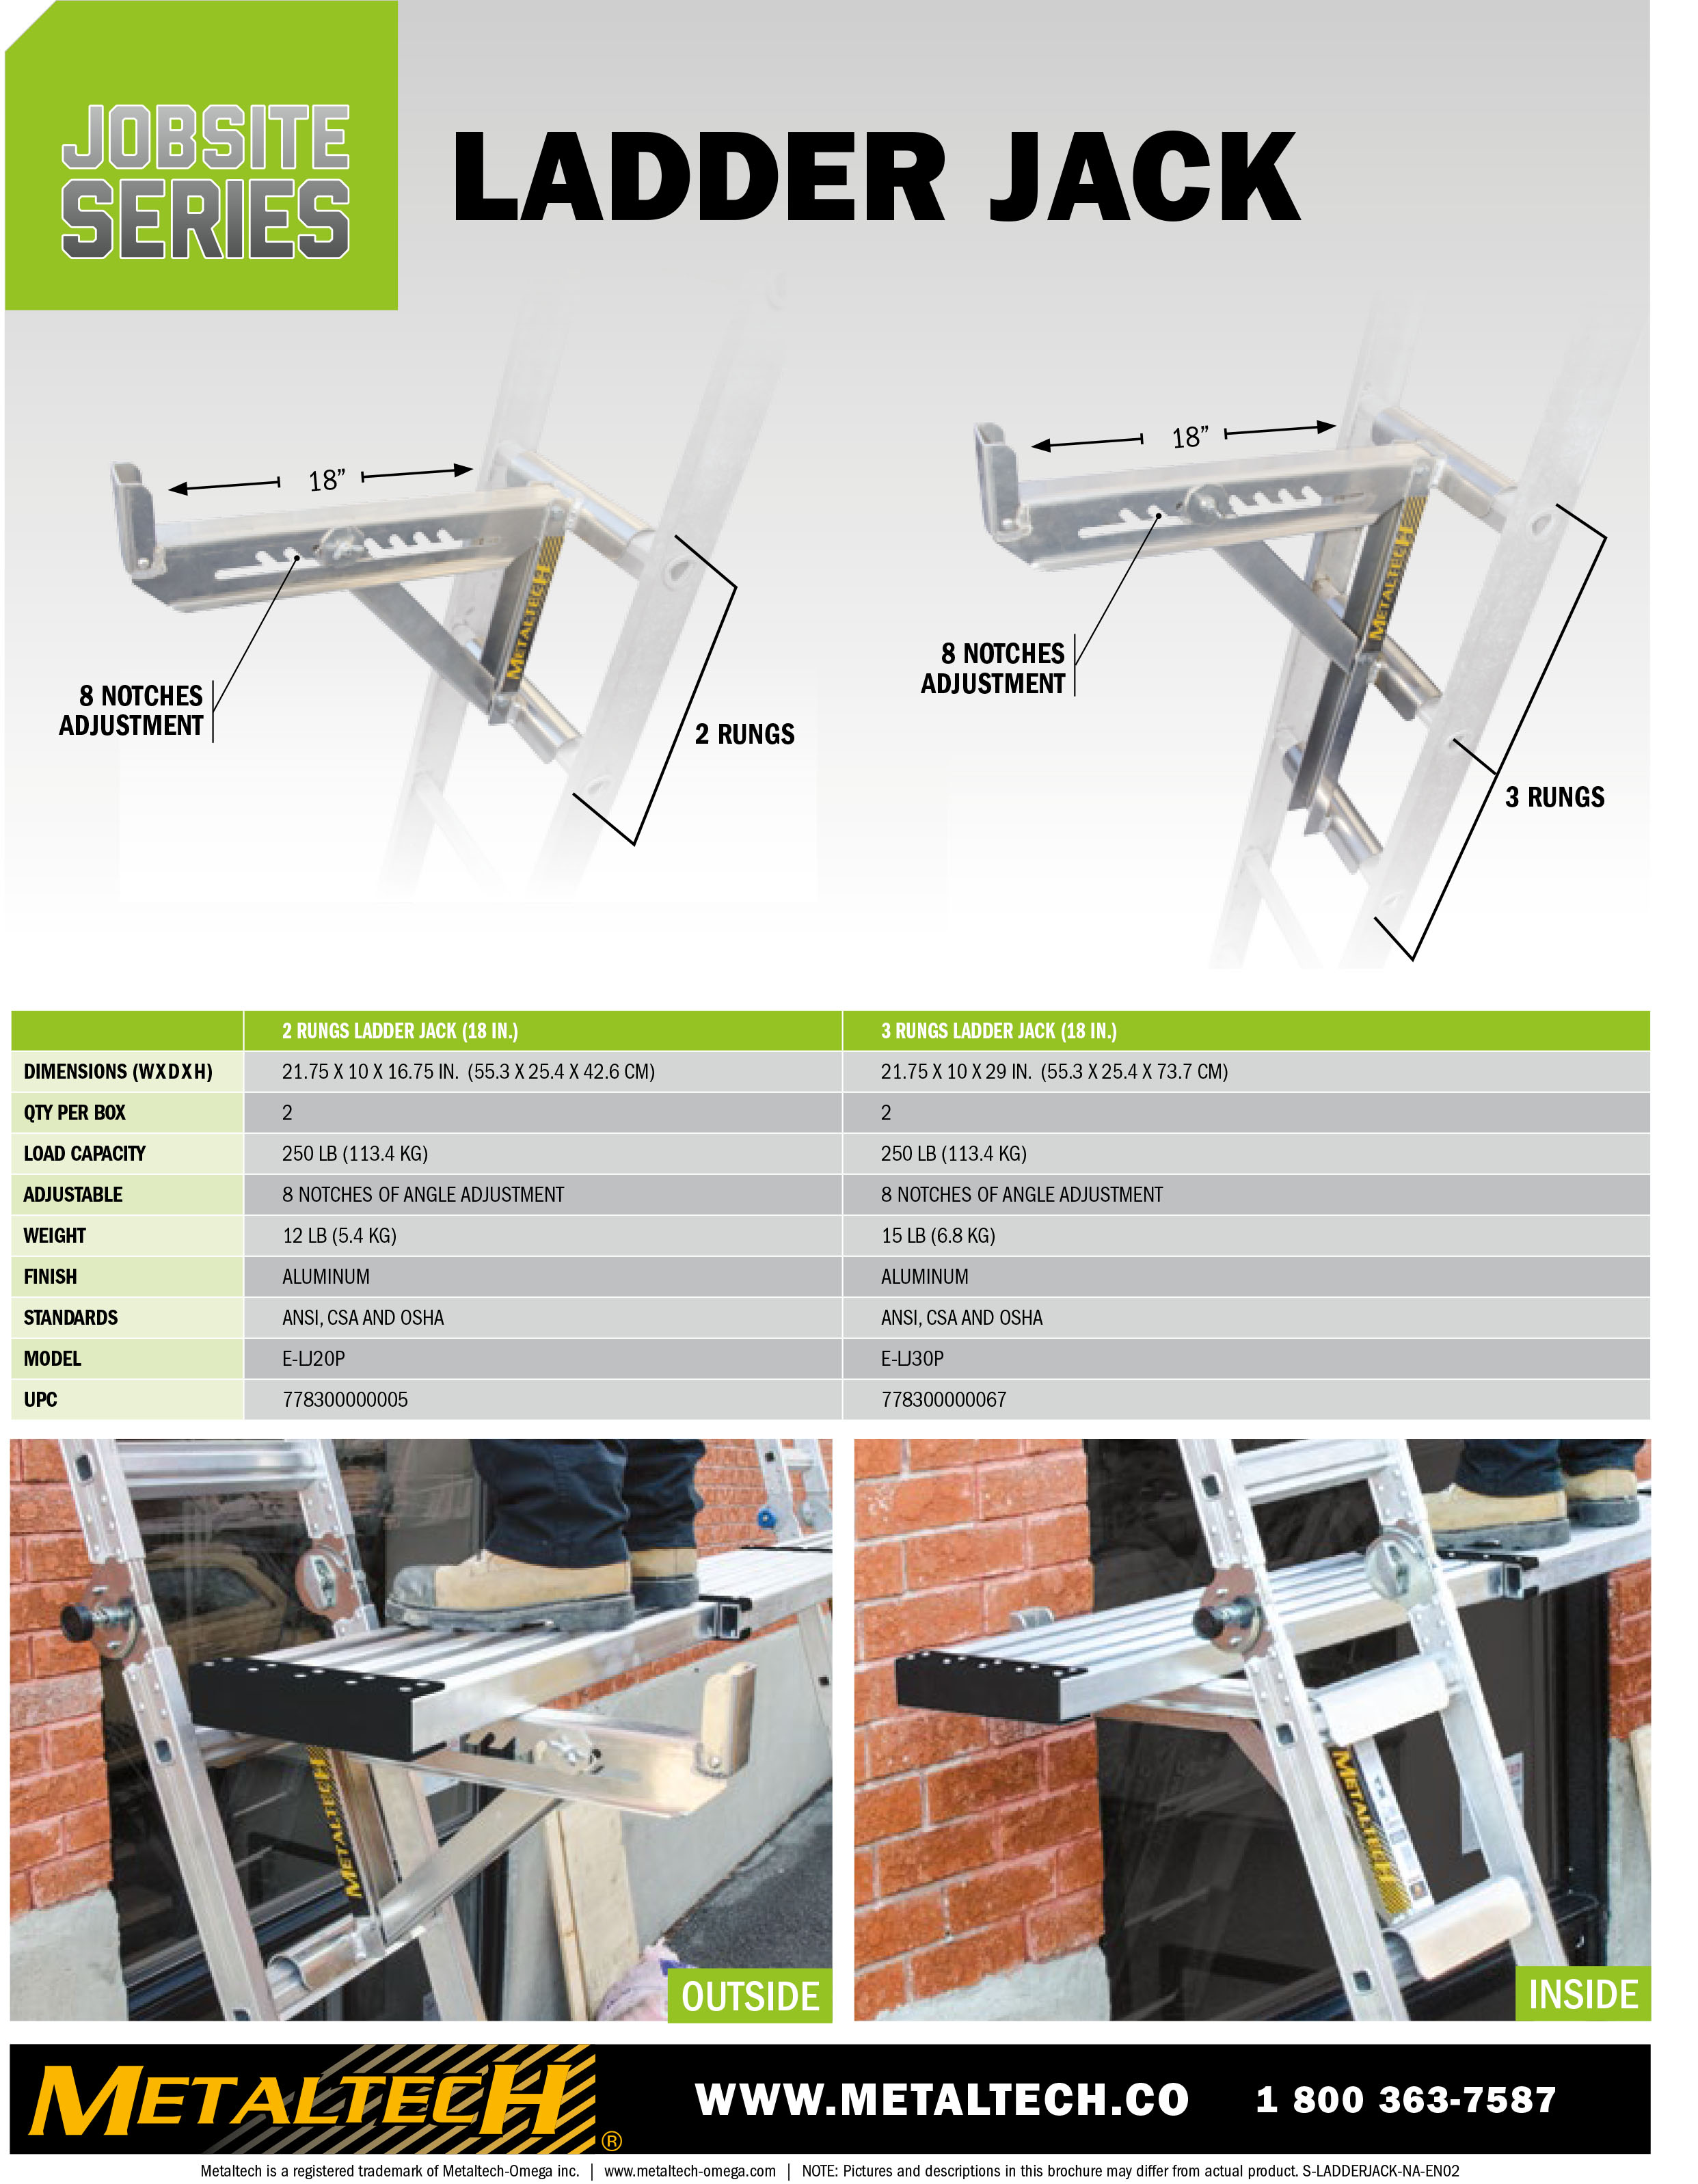 metaltech-ladder-jacks-2.jpg